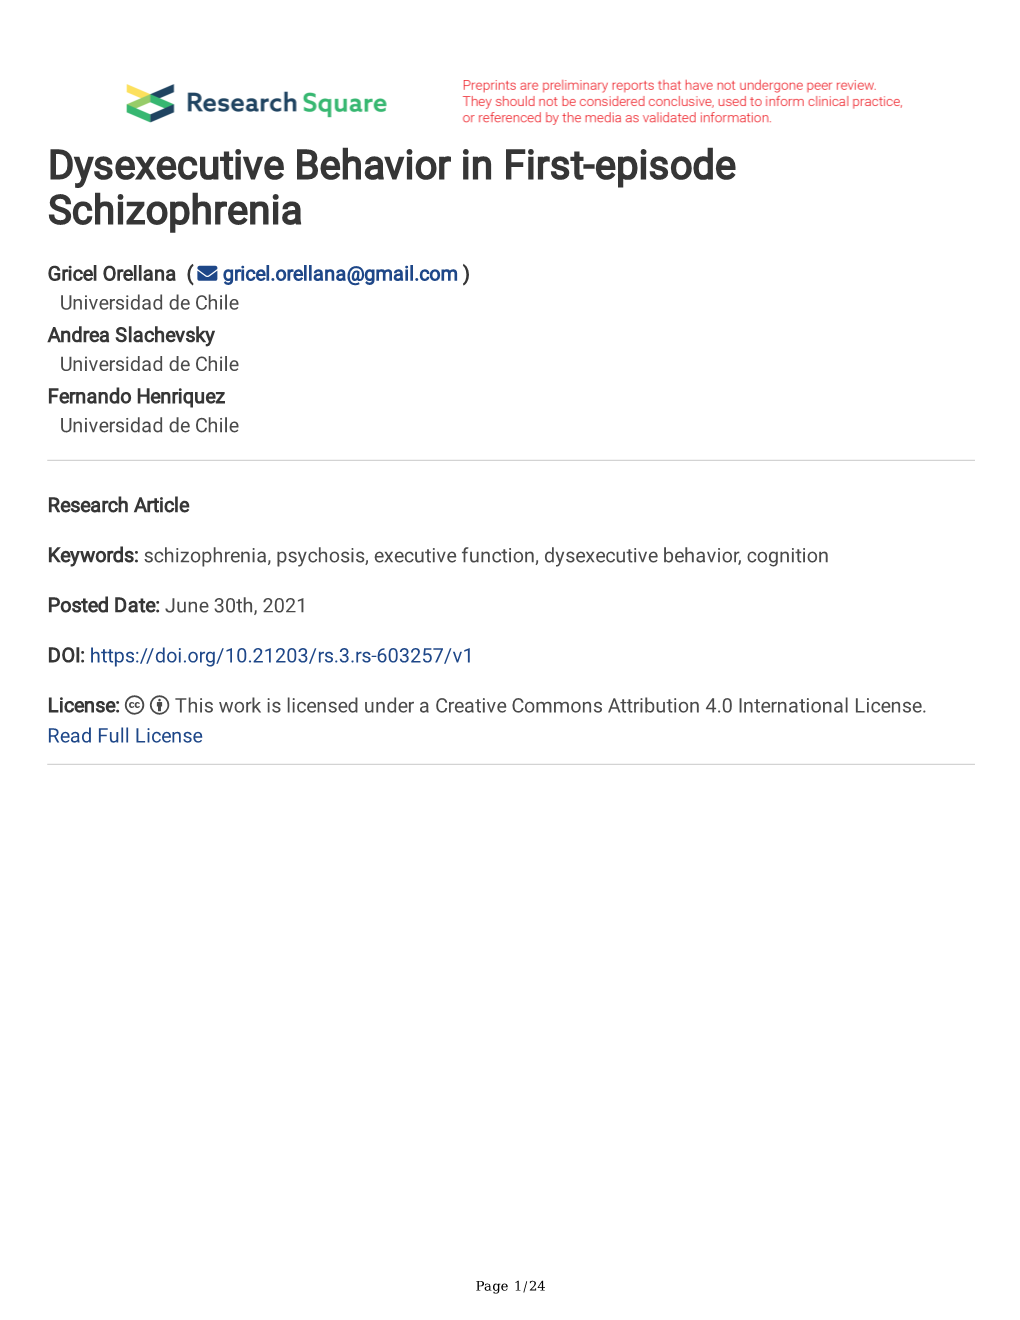 Dysexecutive Behavior in First-Episode Schizophrenia